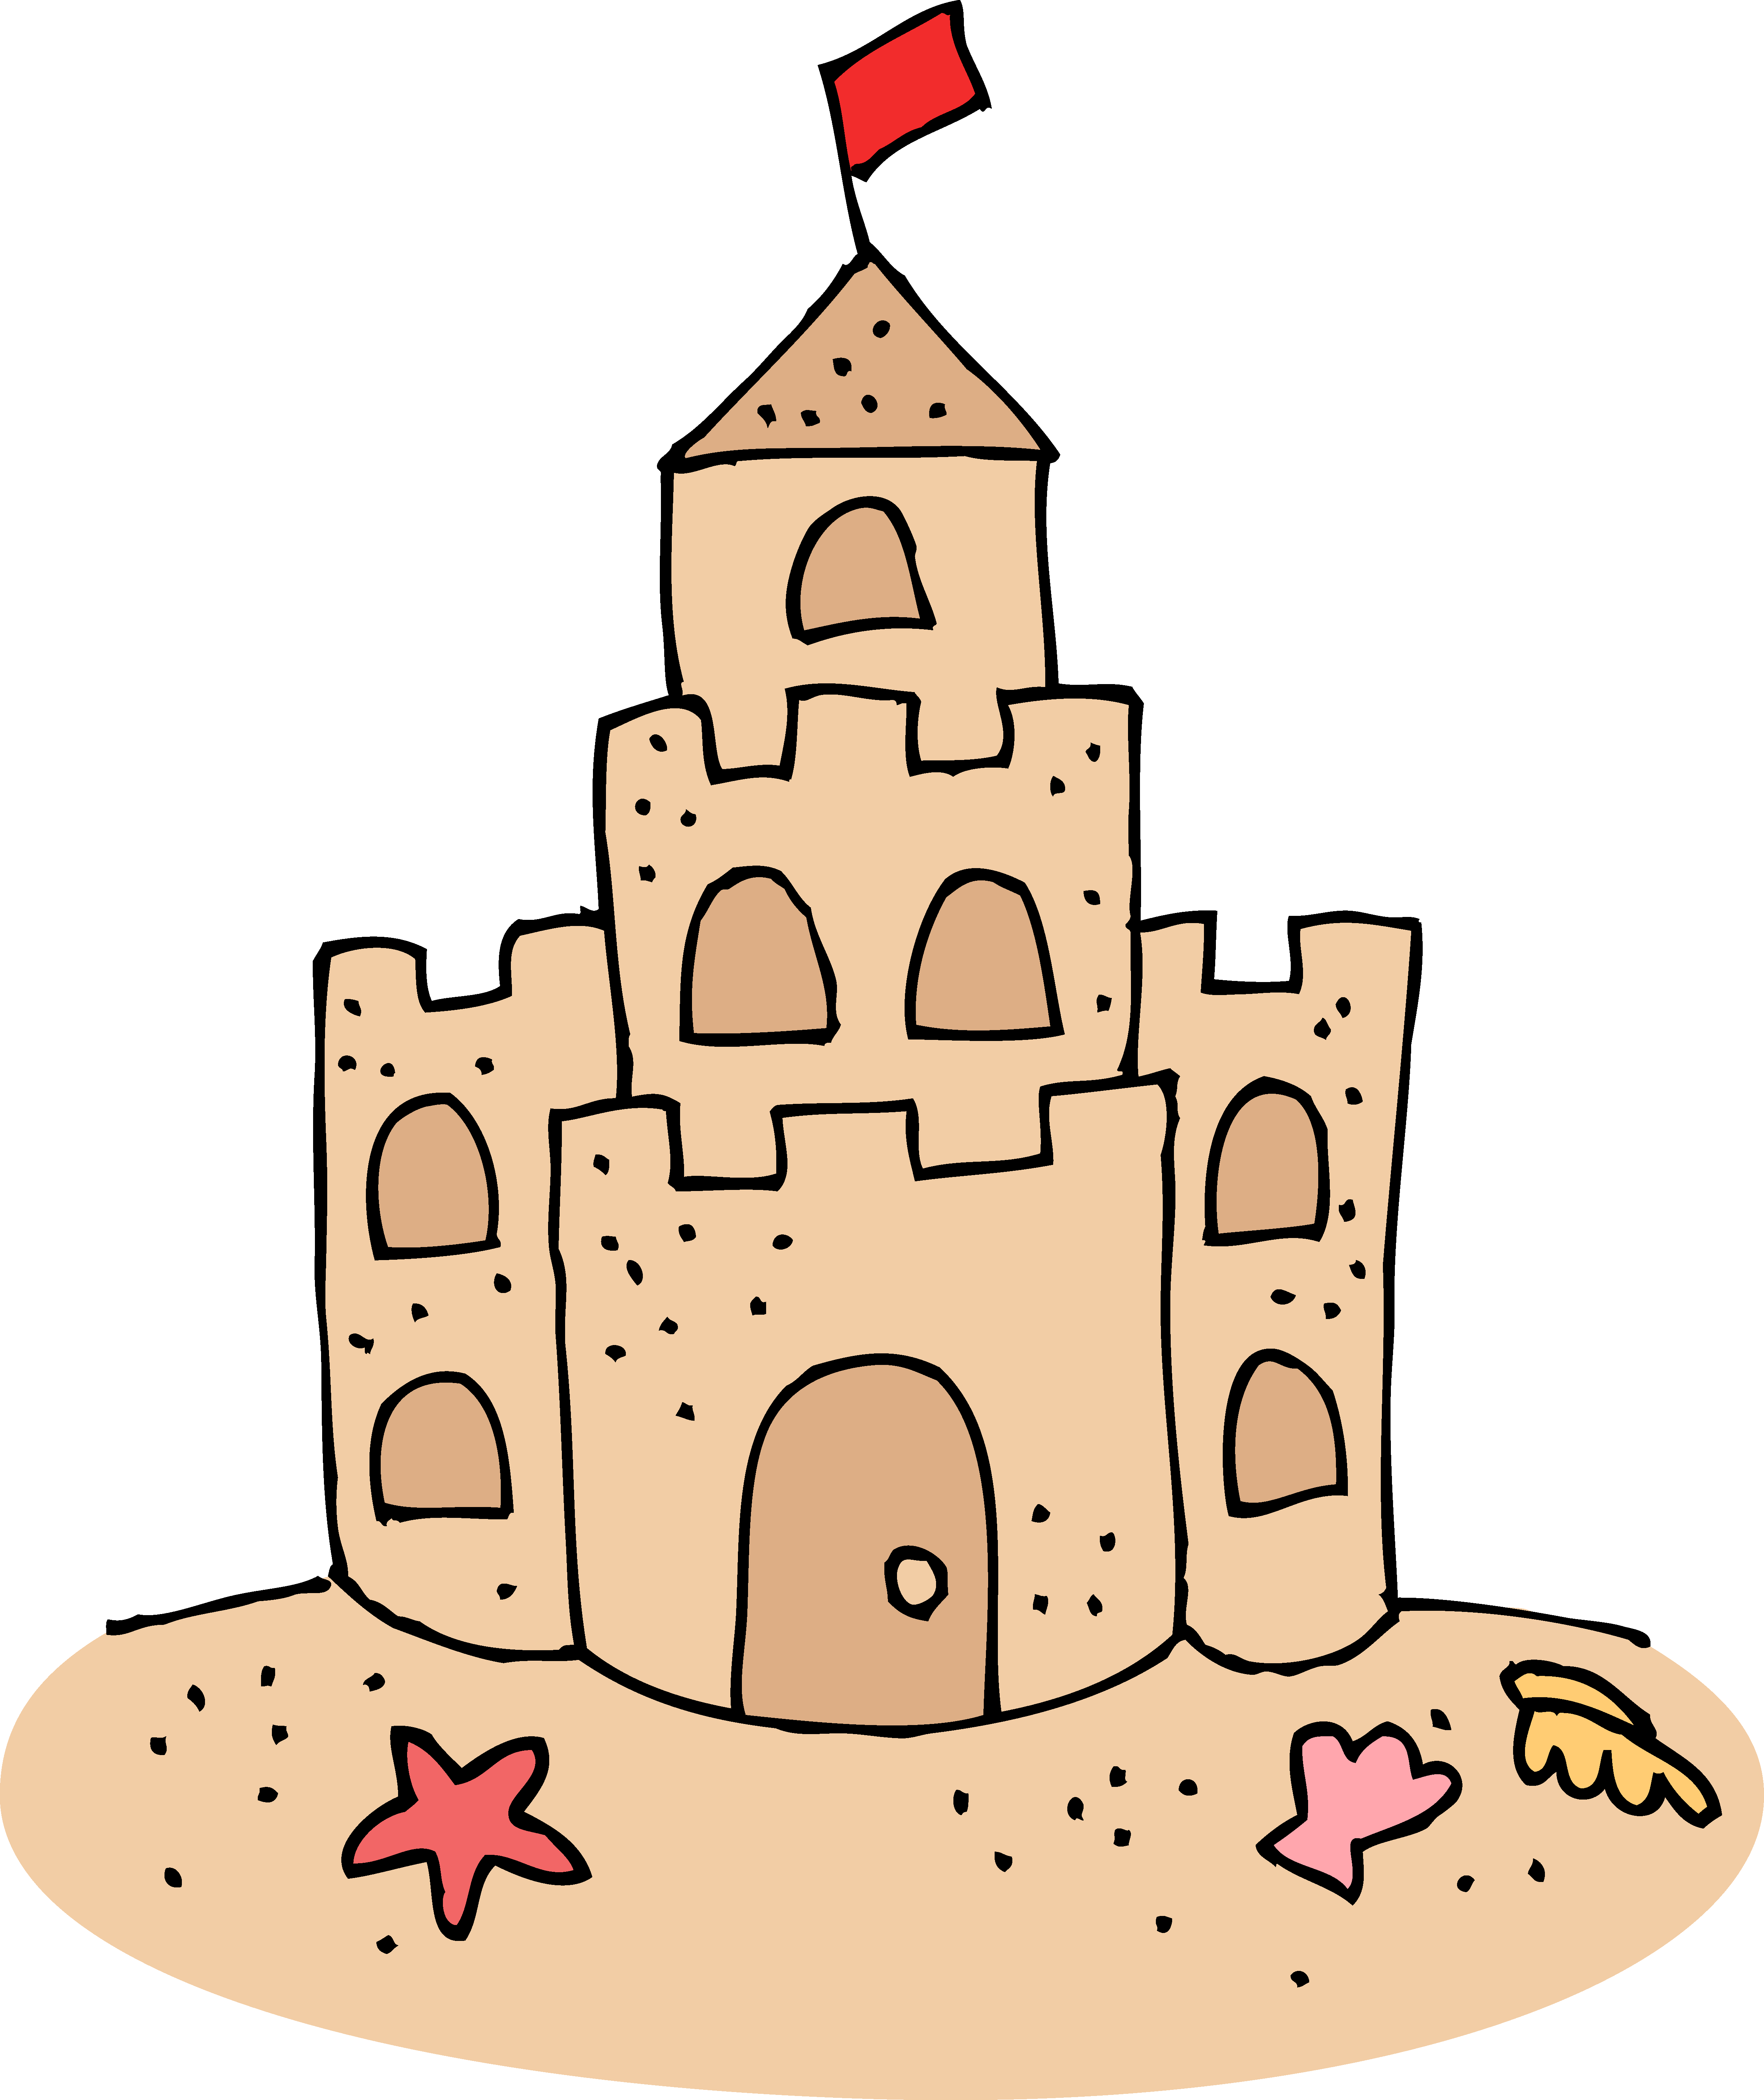 Castle Pictures For Kids | Free Download Clip Art | Free Clip Art ...